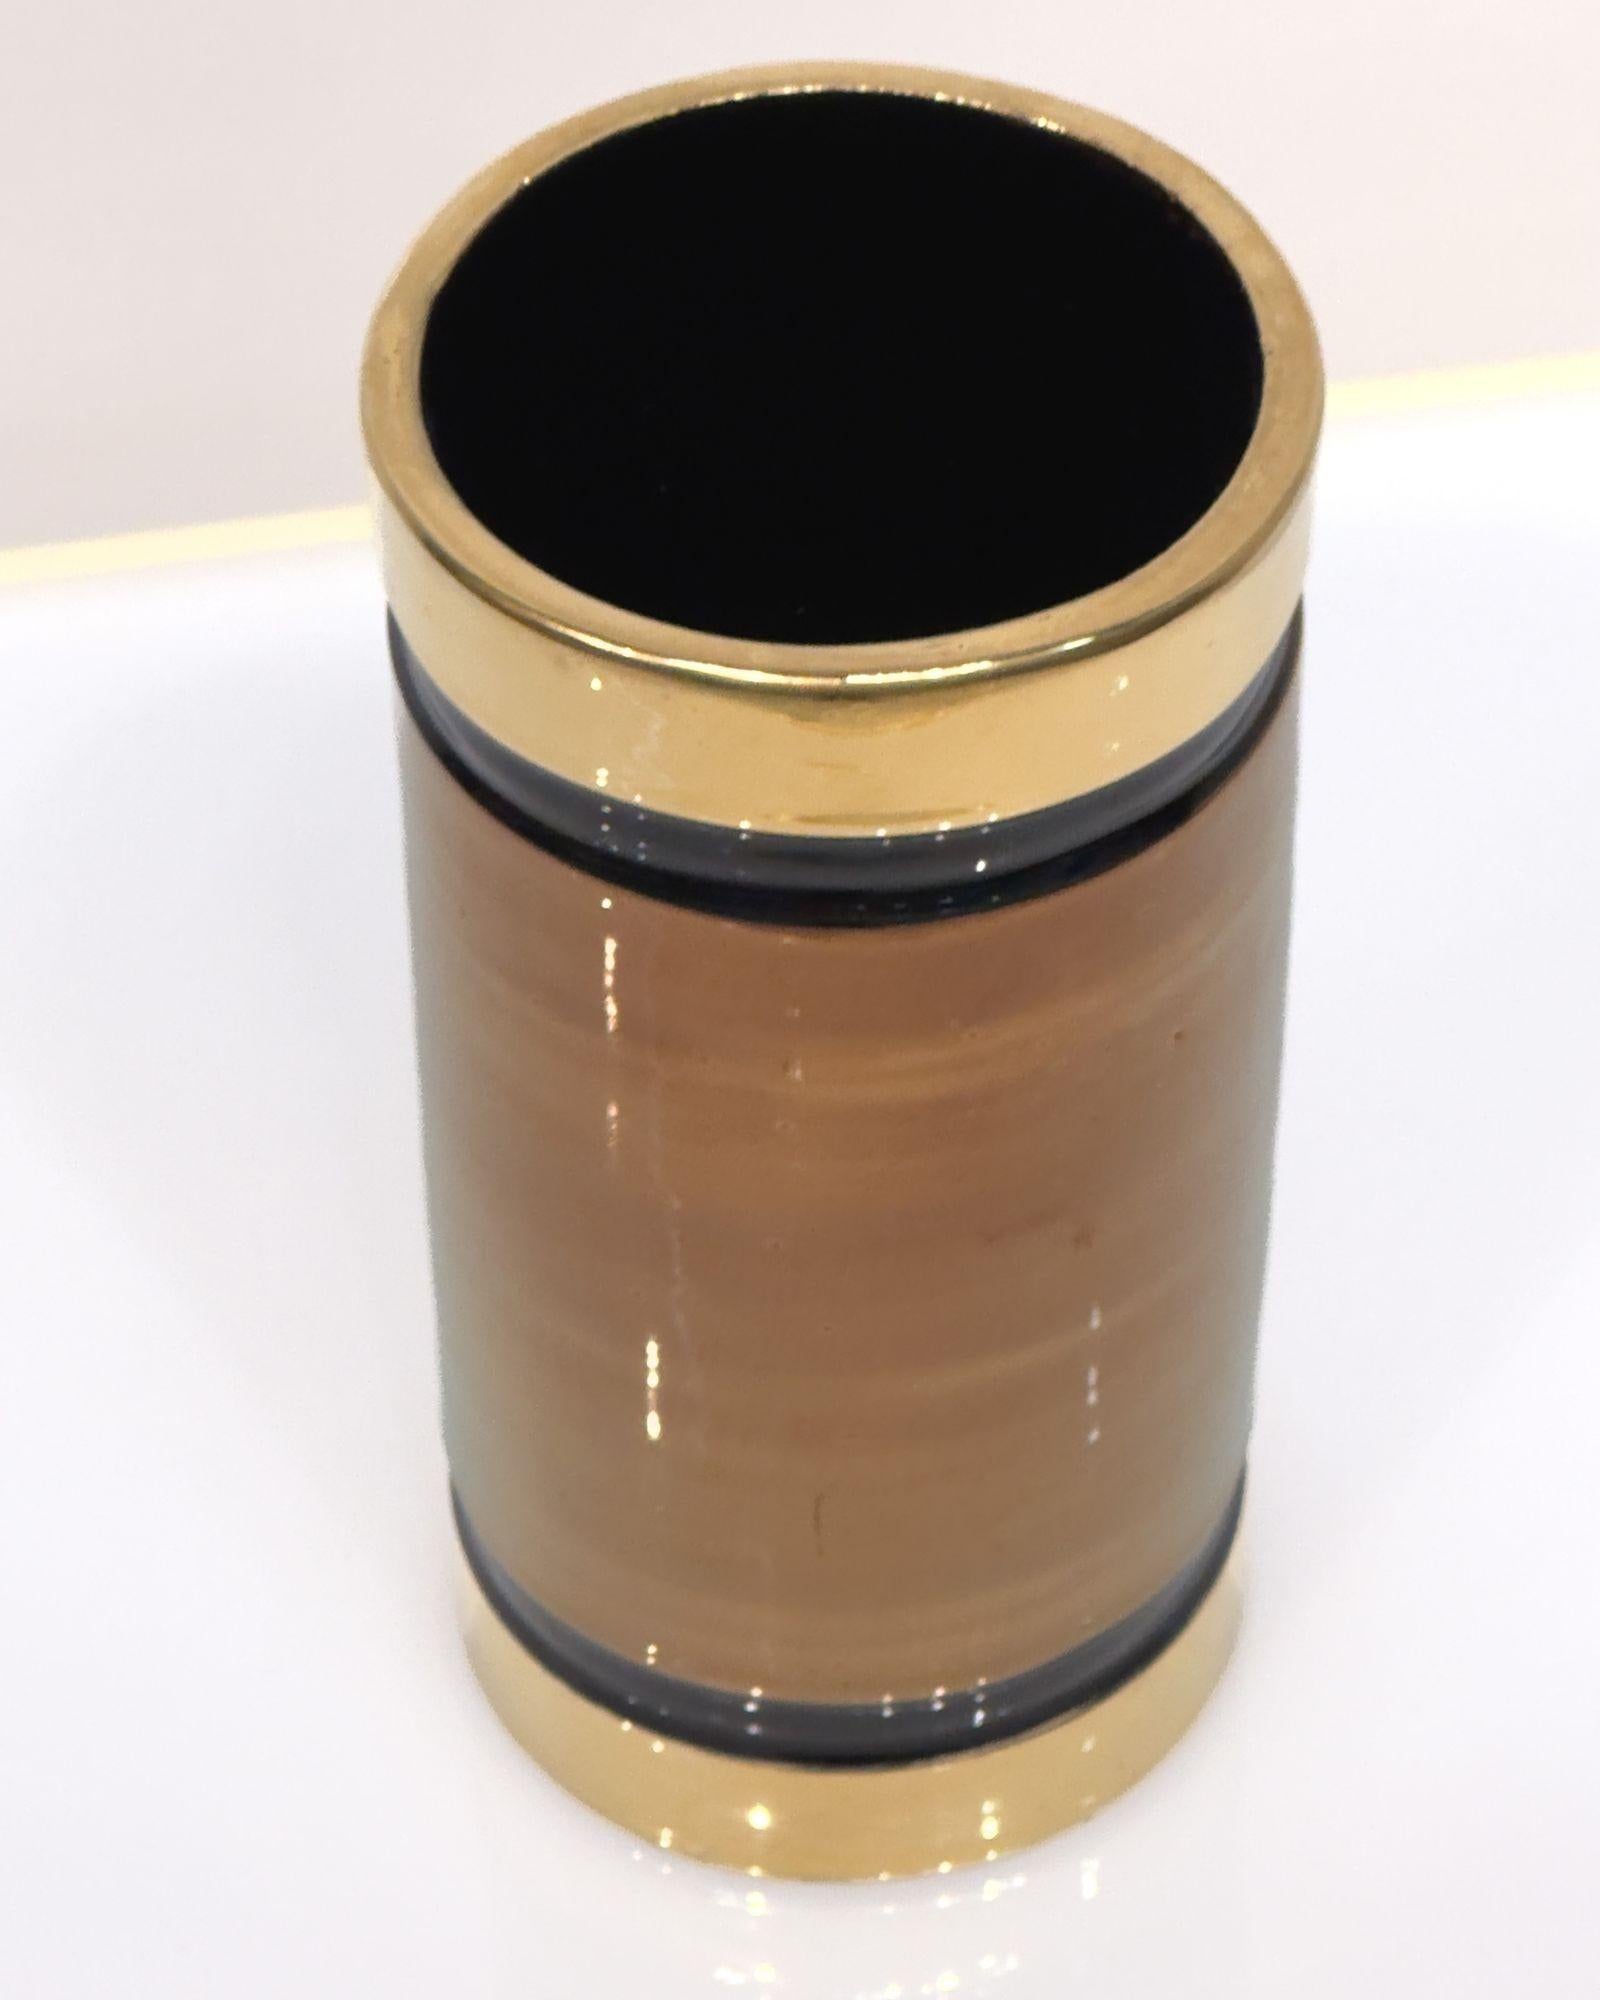 Bitossi Rosenthal-Netter Vase Gold/Black Metallic, Italy. Vase is labeled Italy on bottom.
Measurements 8